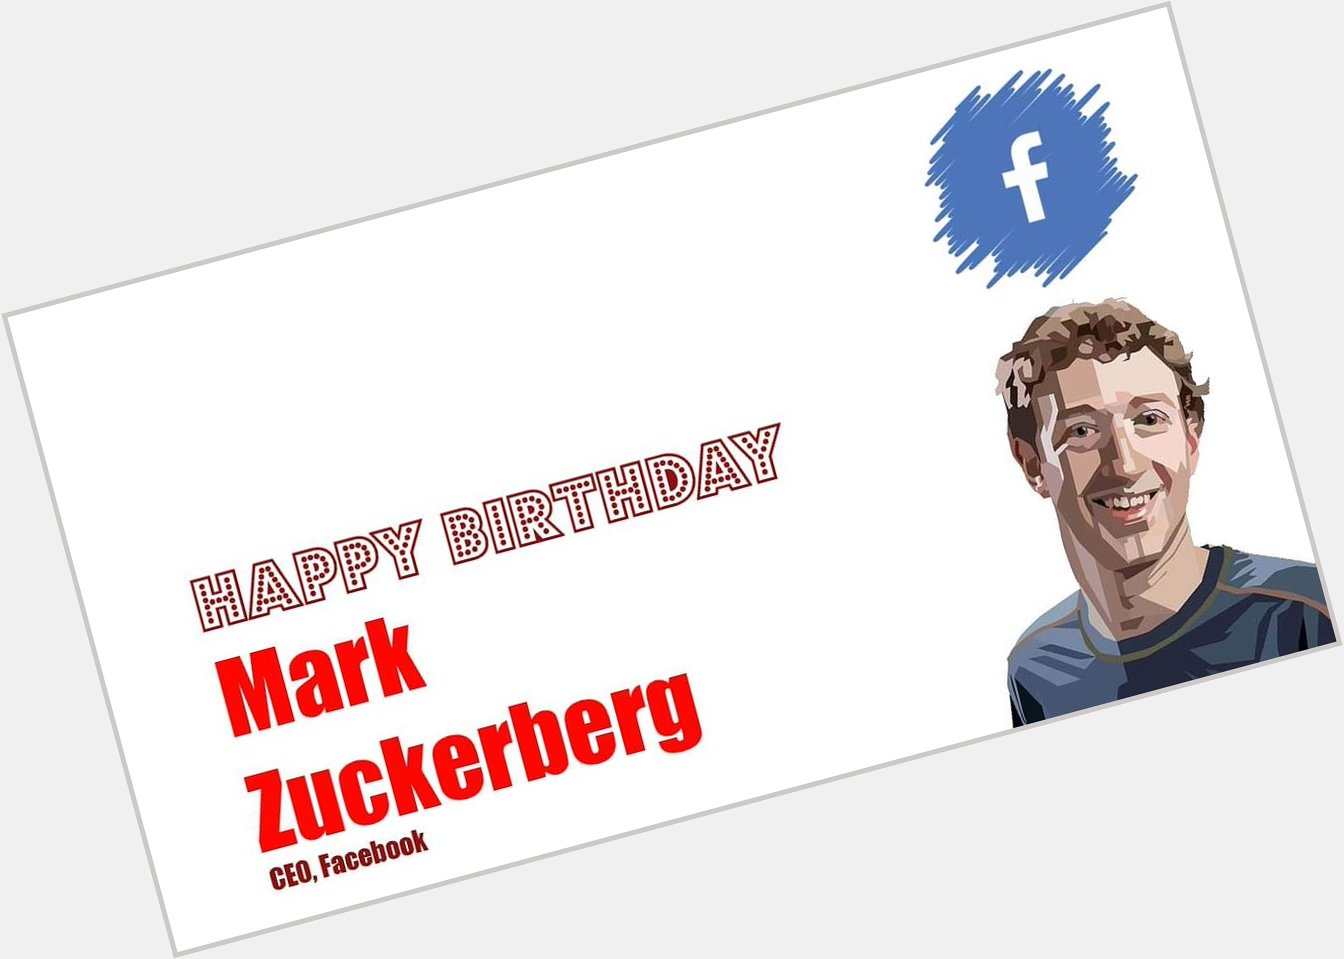 Wishing Mark Zuckerberg a very happy birthday 